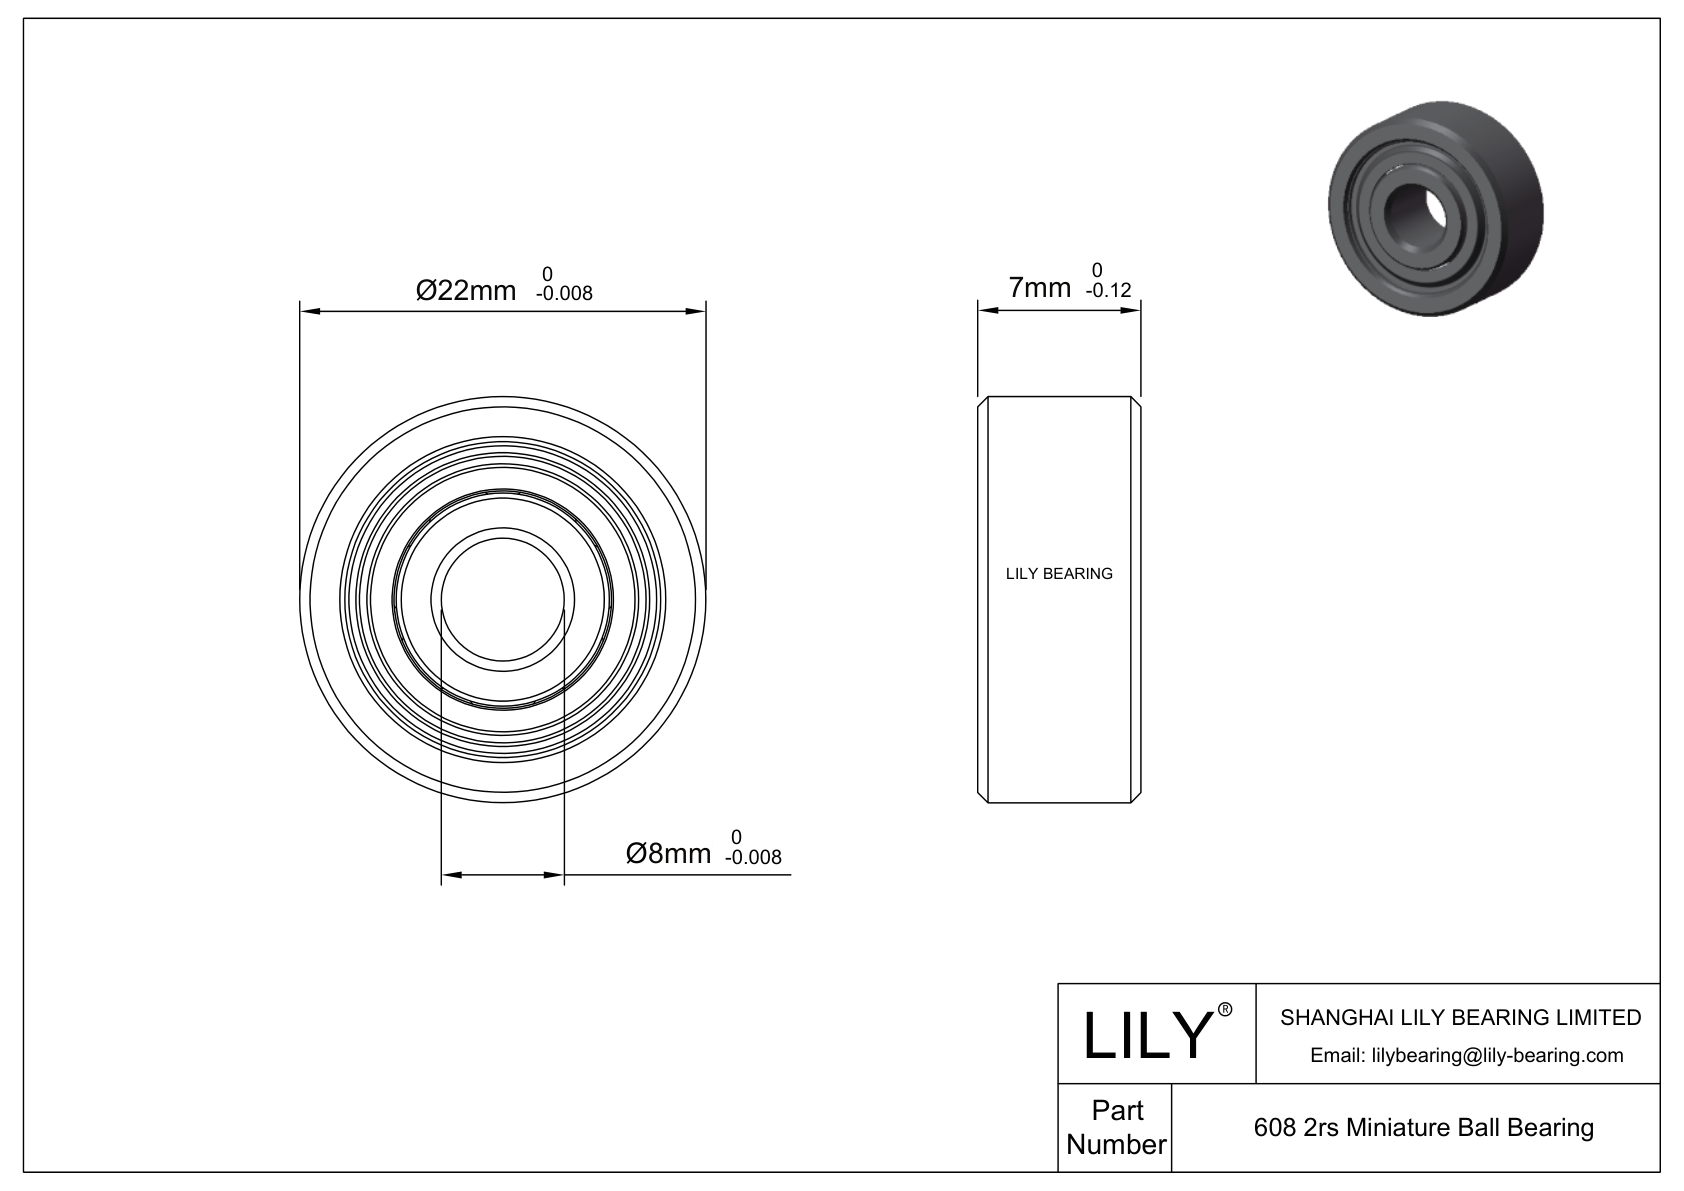 LILY-PU60848-16 Polyurethane Coated Bearing cad drawing